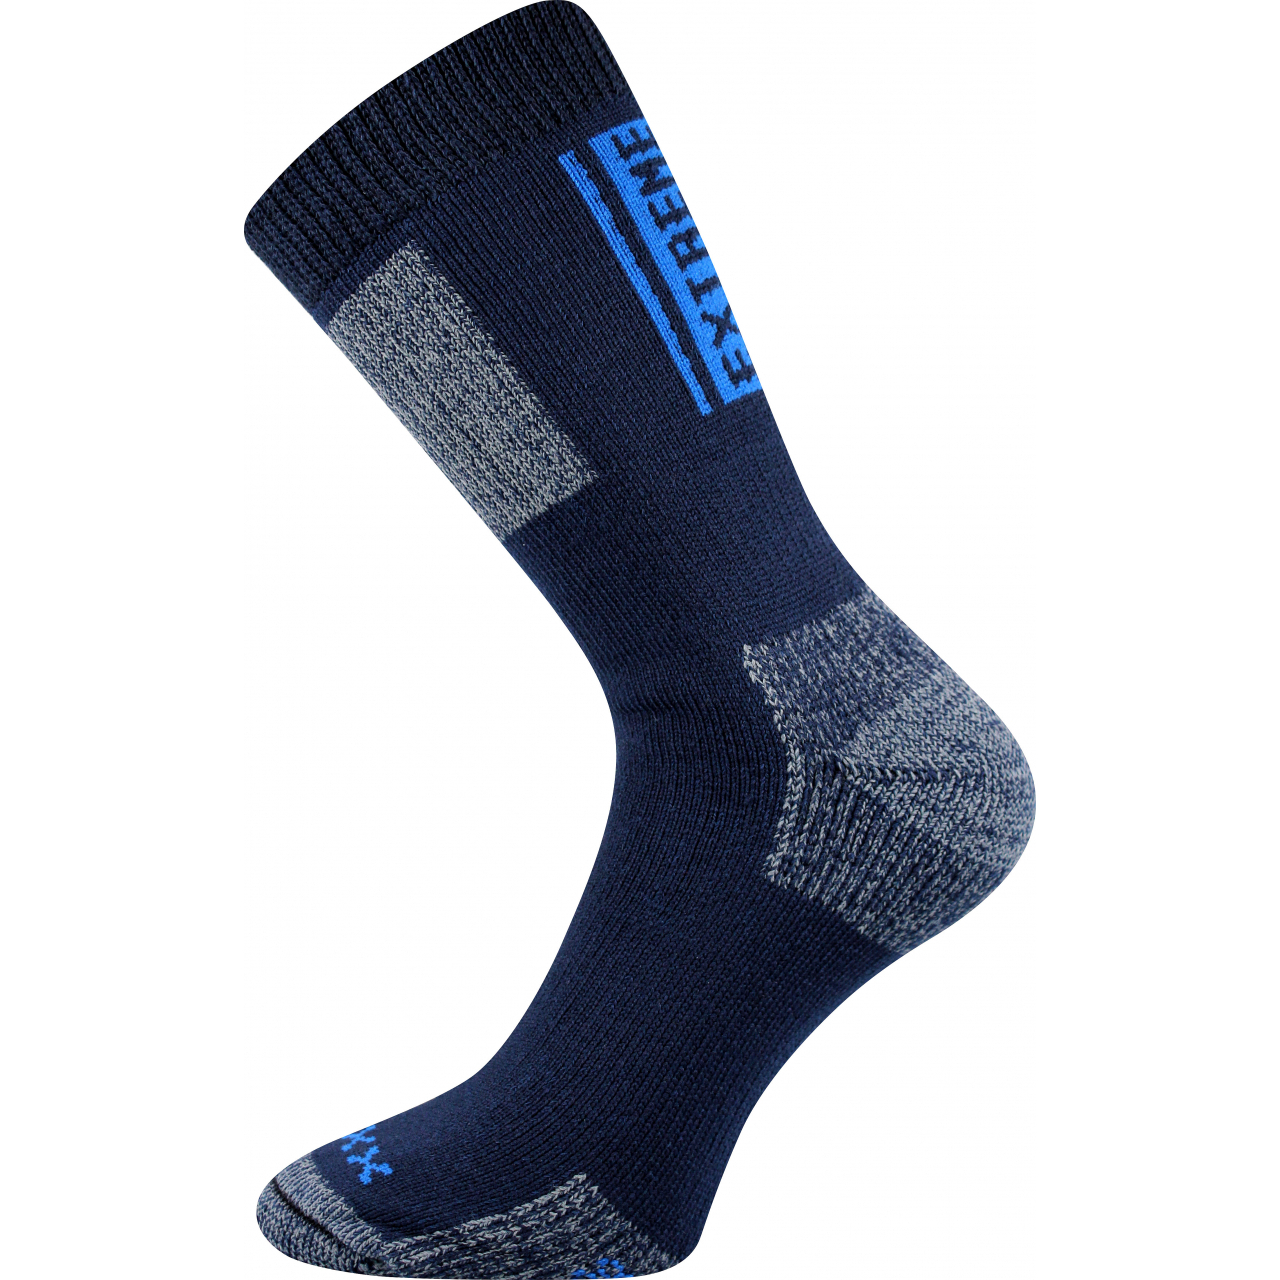 Ponožky unisex termo Voxx Extrém - tmavě modré, 39-42